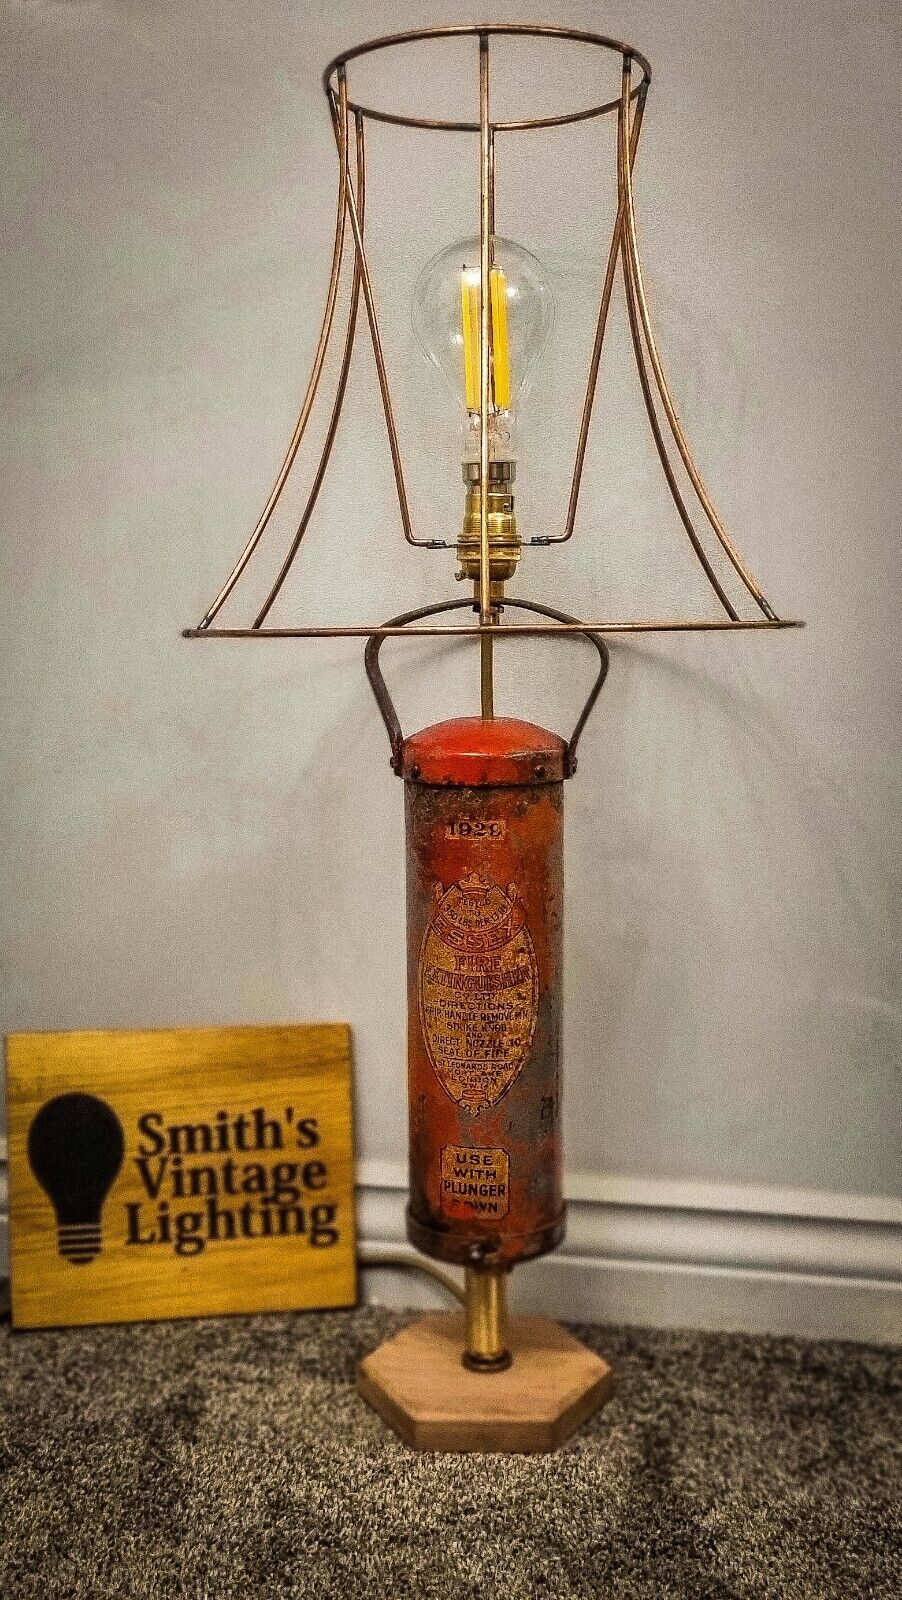 💥🚒 Vintage Fire Extinguisher 1929 Essex London UK 🇬🇧 Must See Bespoke Lamp 